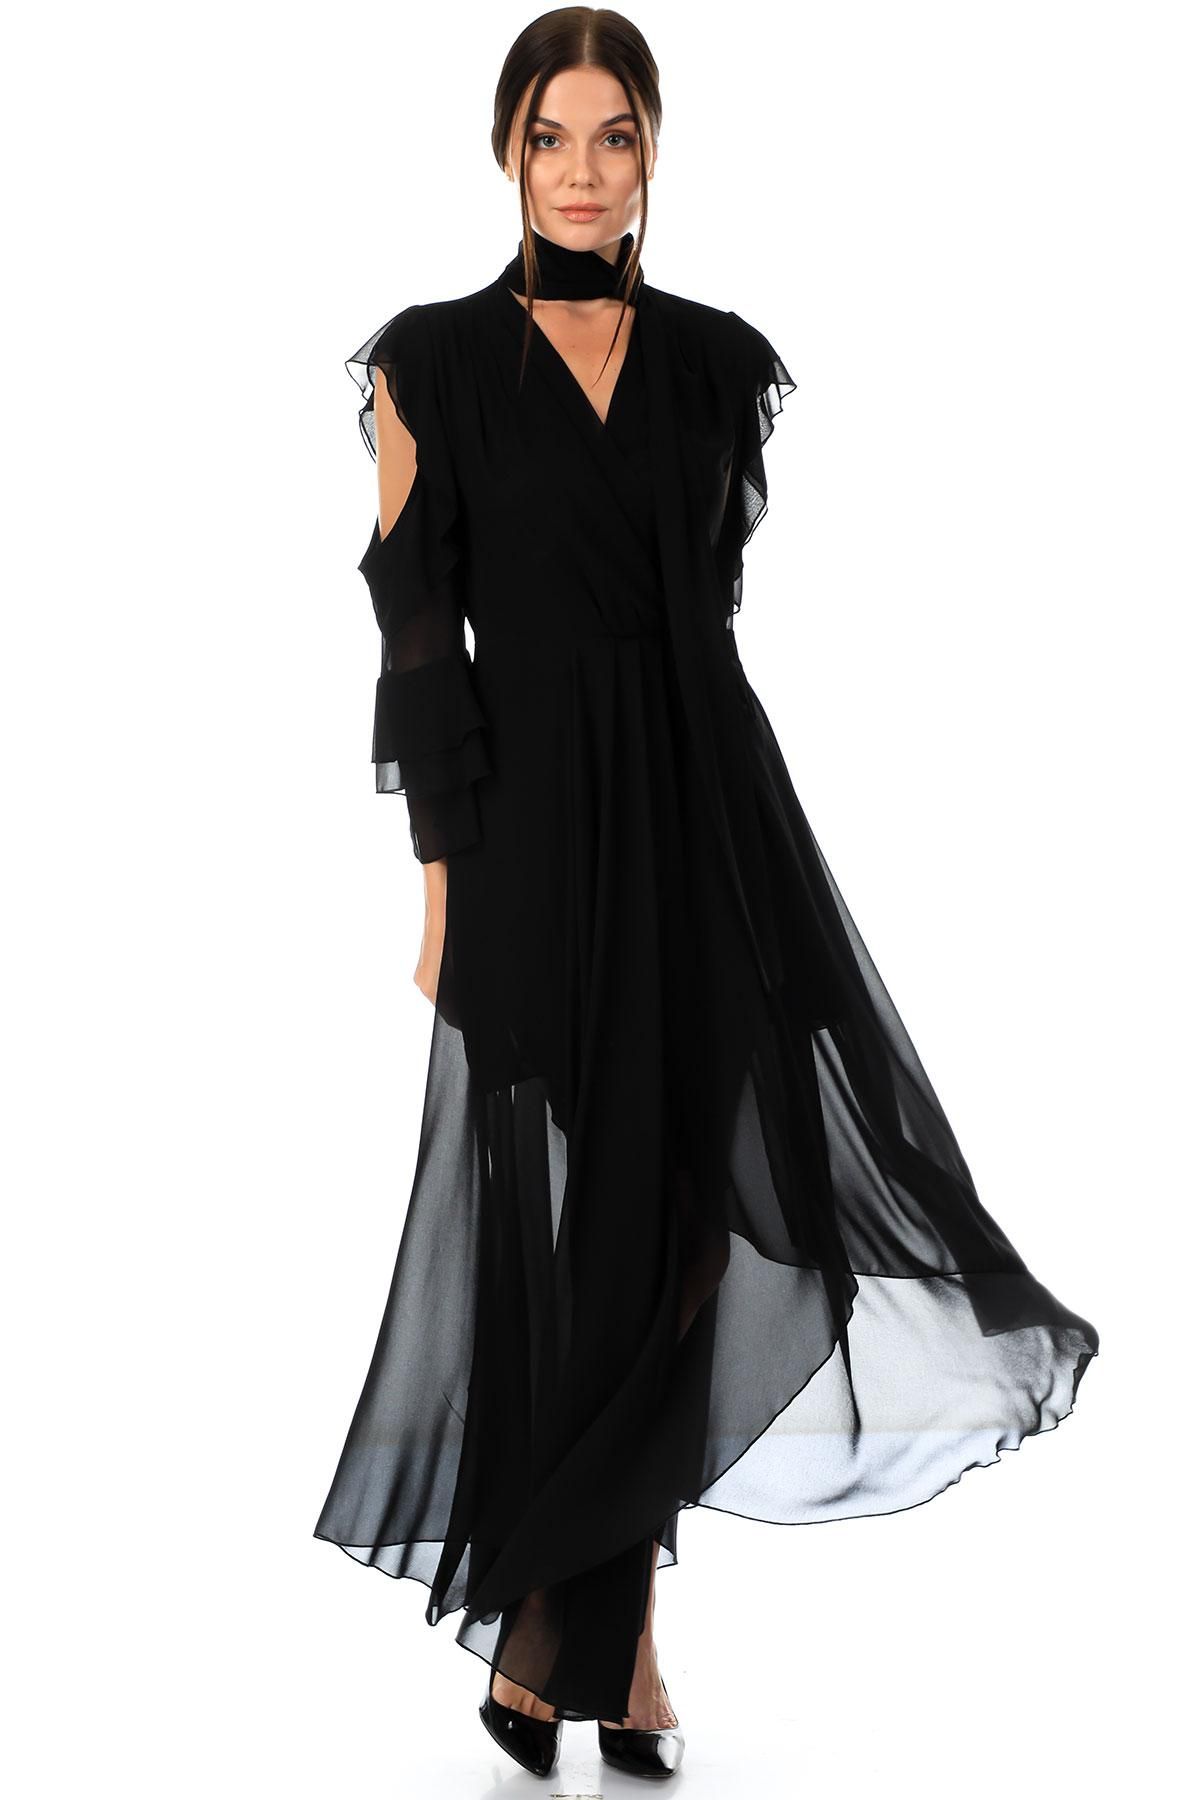 KEDMA 8-98177 BLACK Women Evening Gown | Dosso Dossi